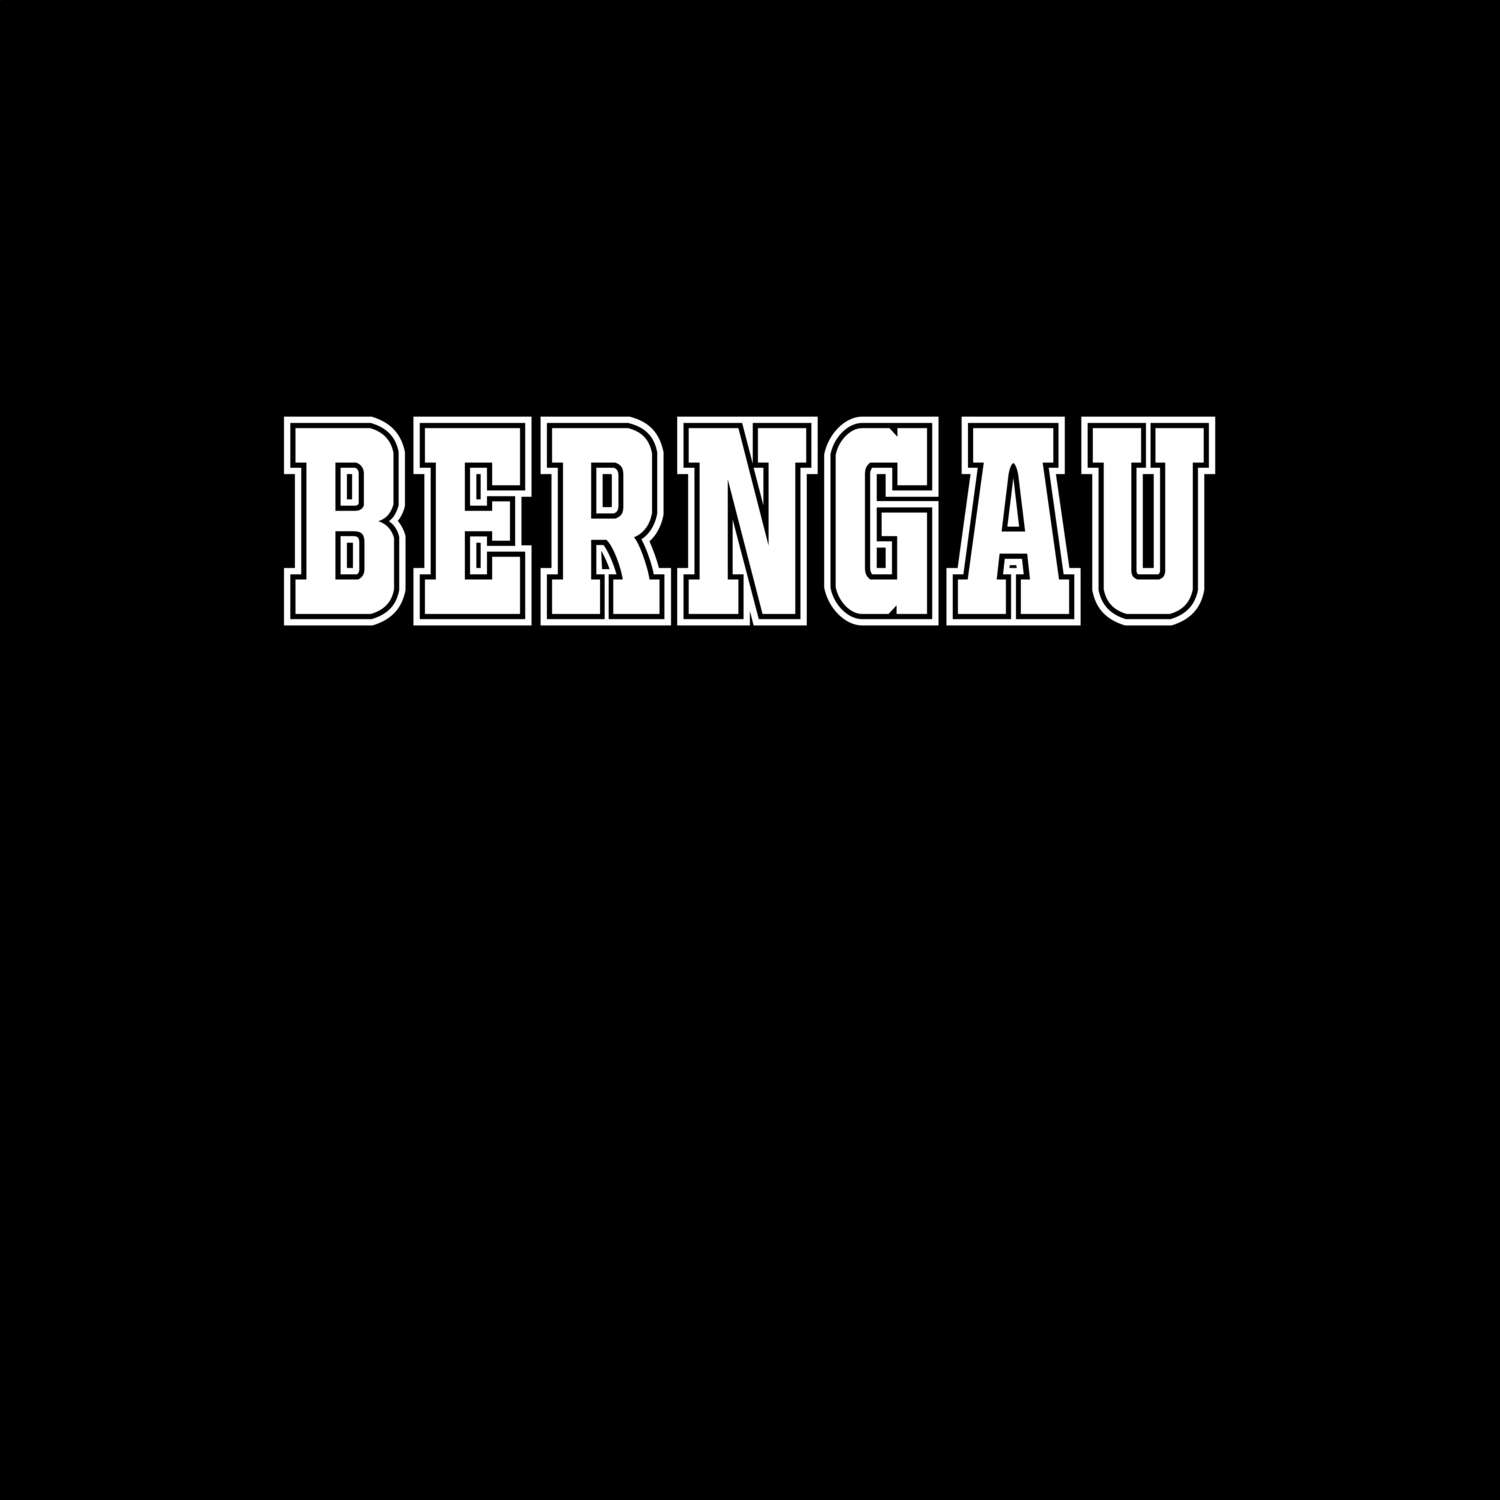 Berngau T-Shirt »Classic«